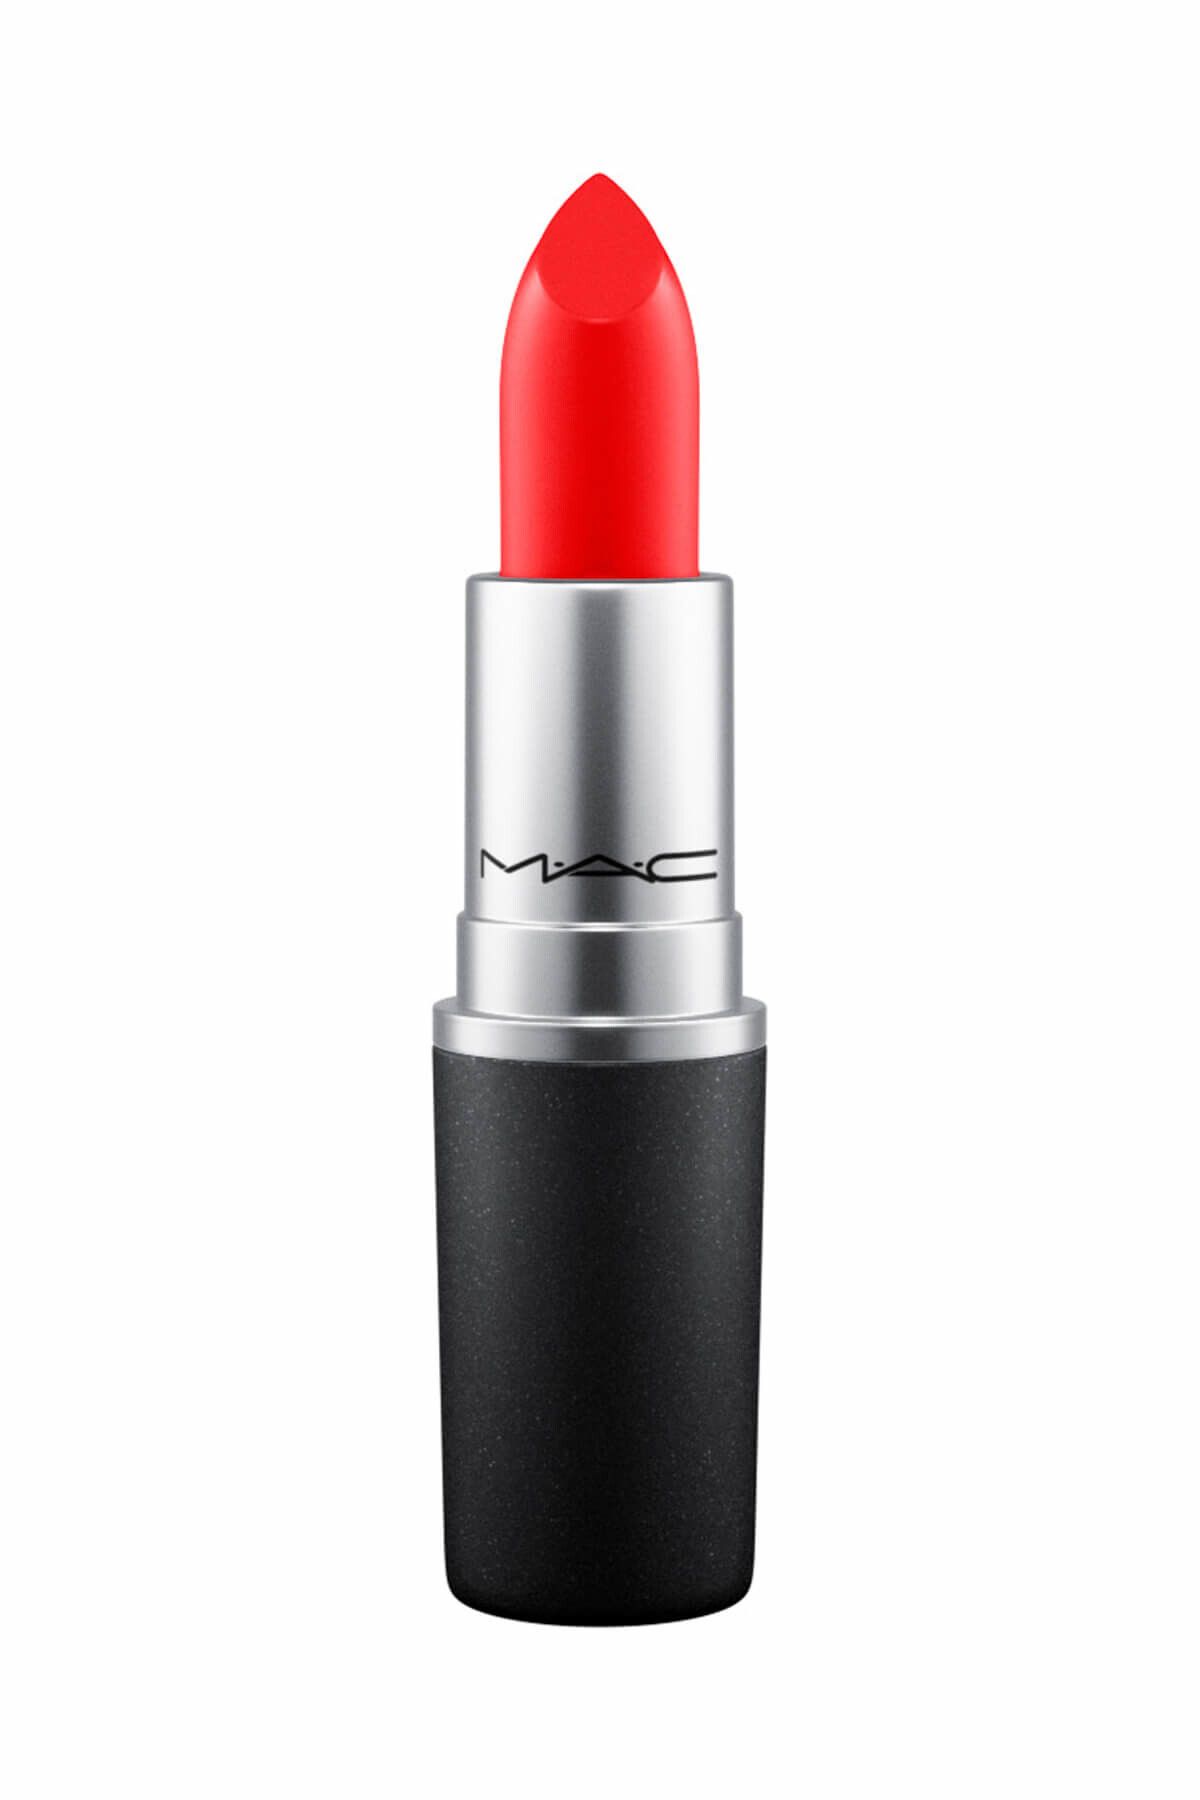 Mac Ruj - Lipstick Mangrove 3 g 773602356003